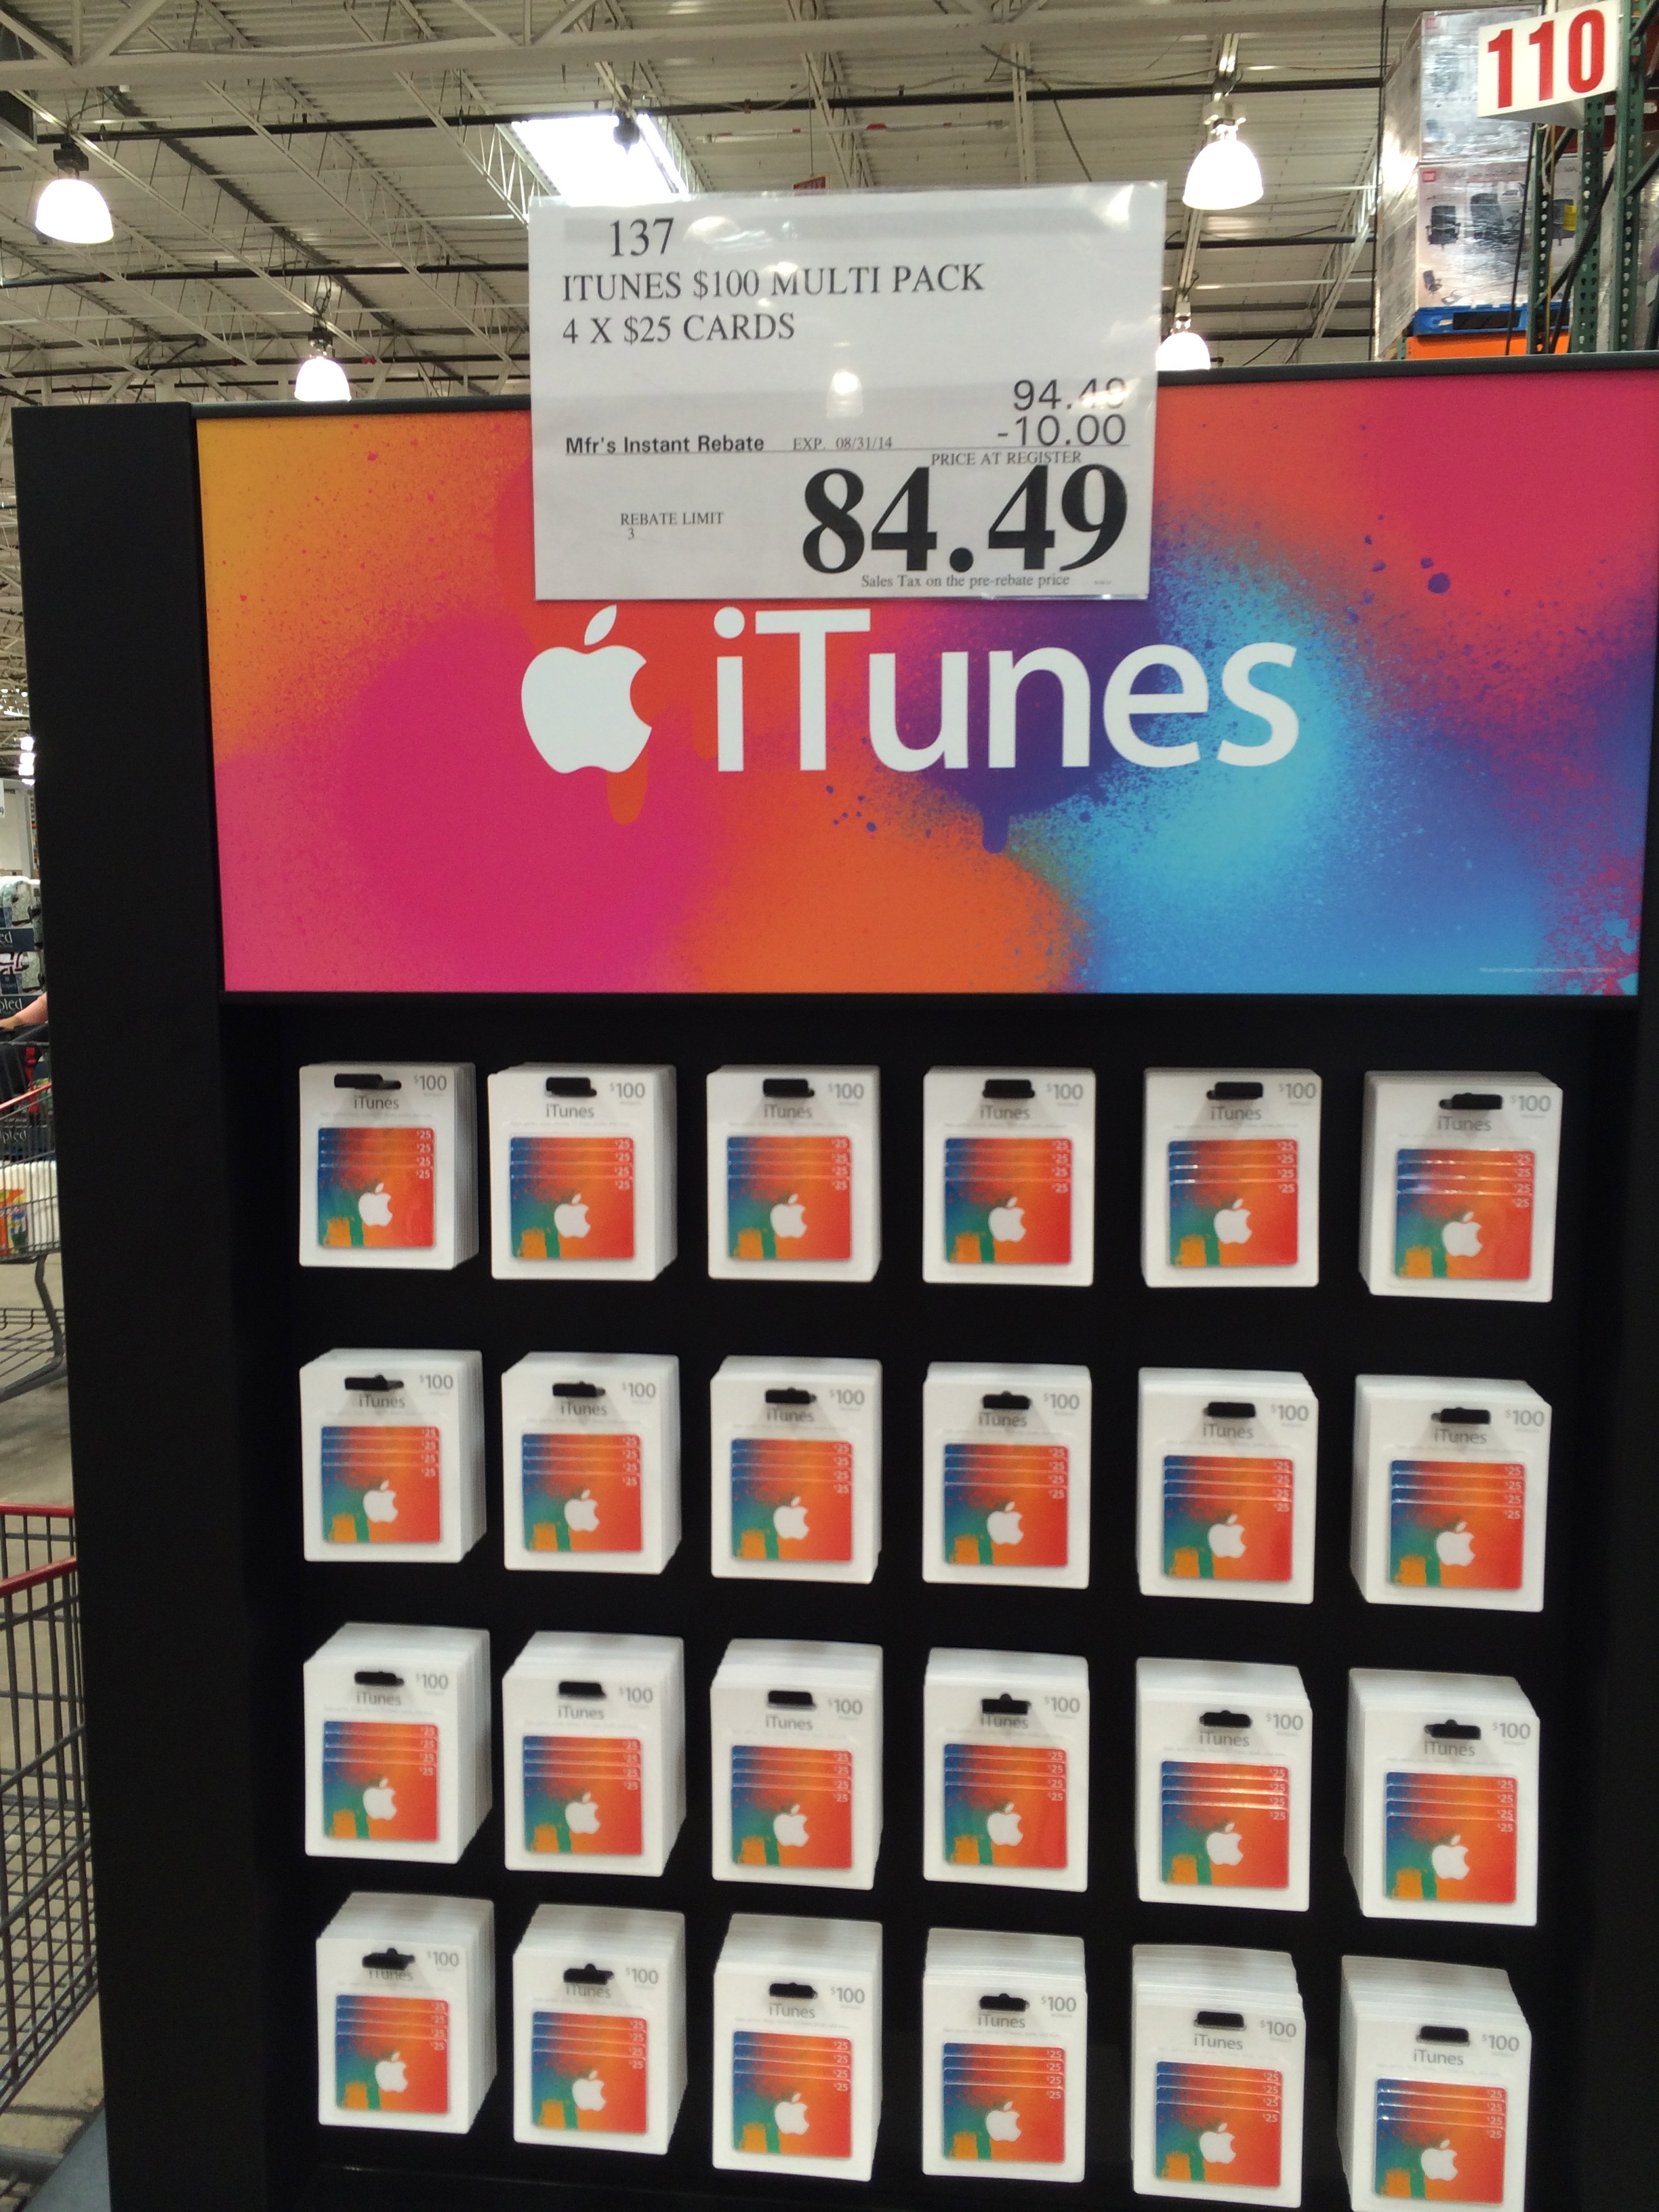 15% iTunes Discount Through August 31, 2014